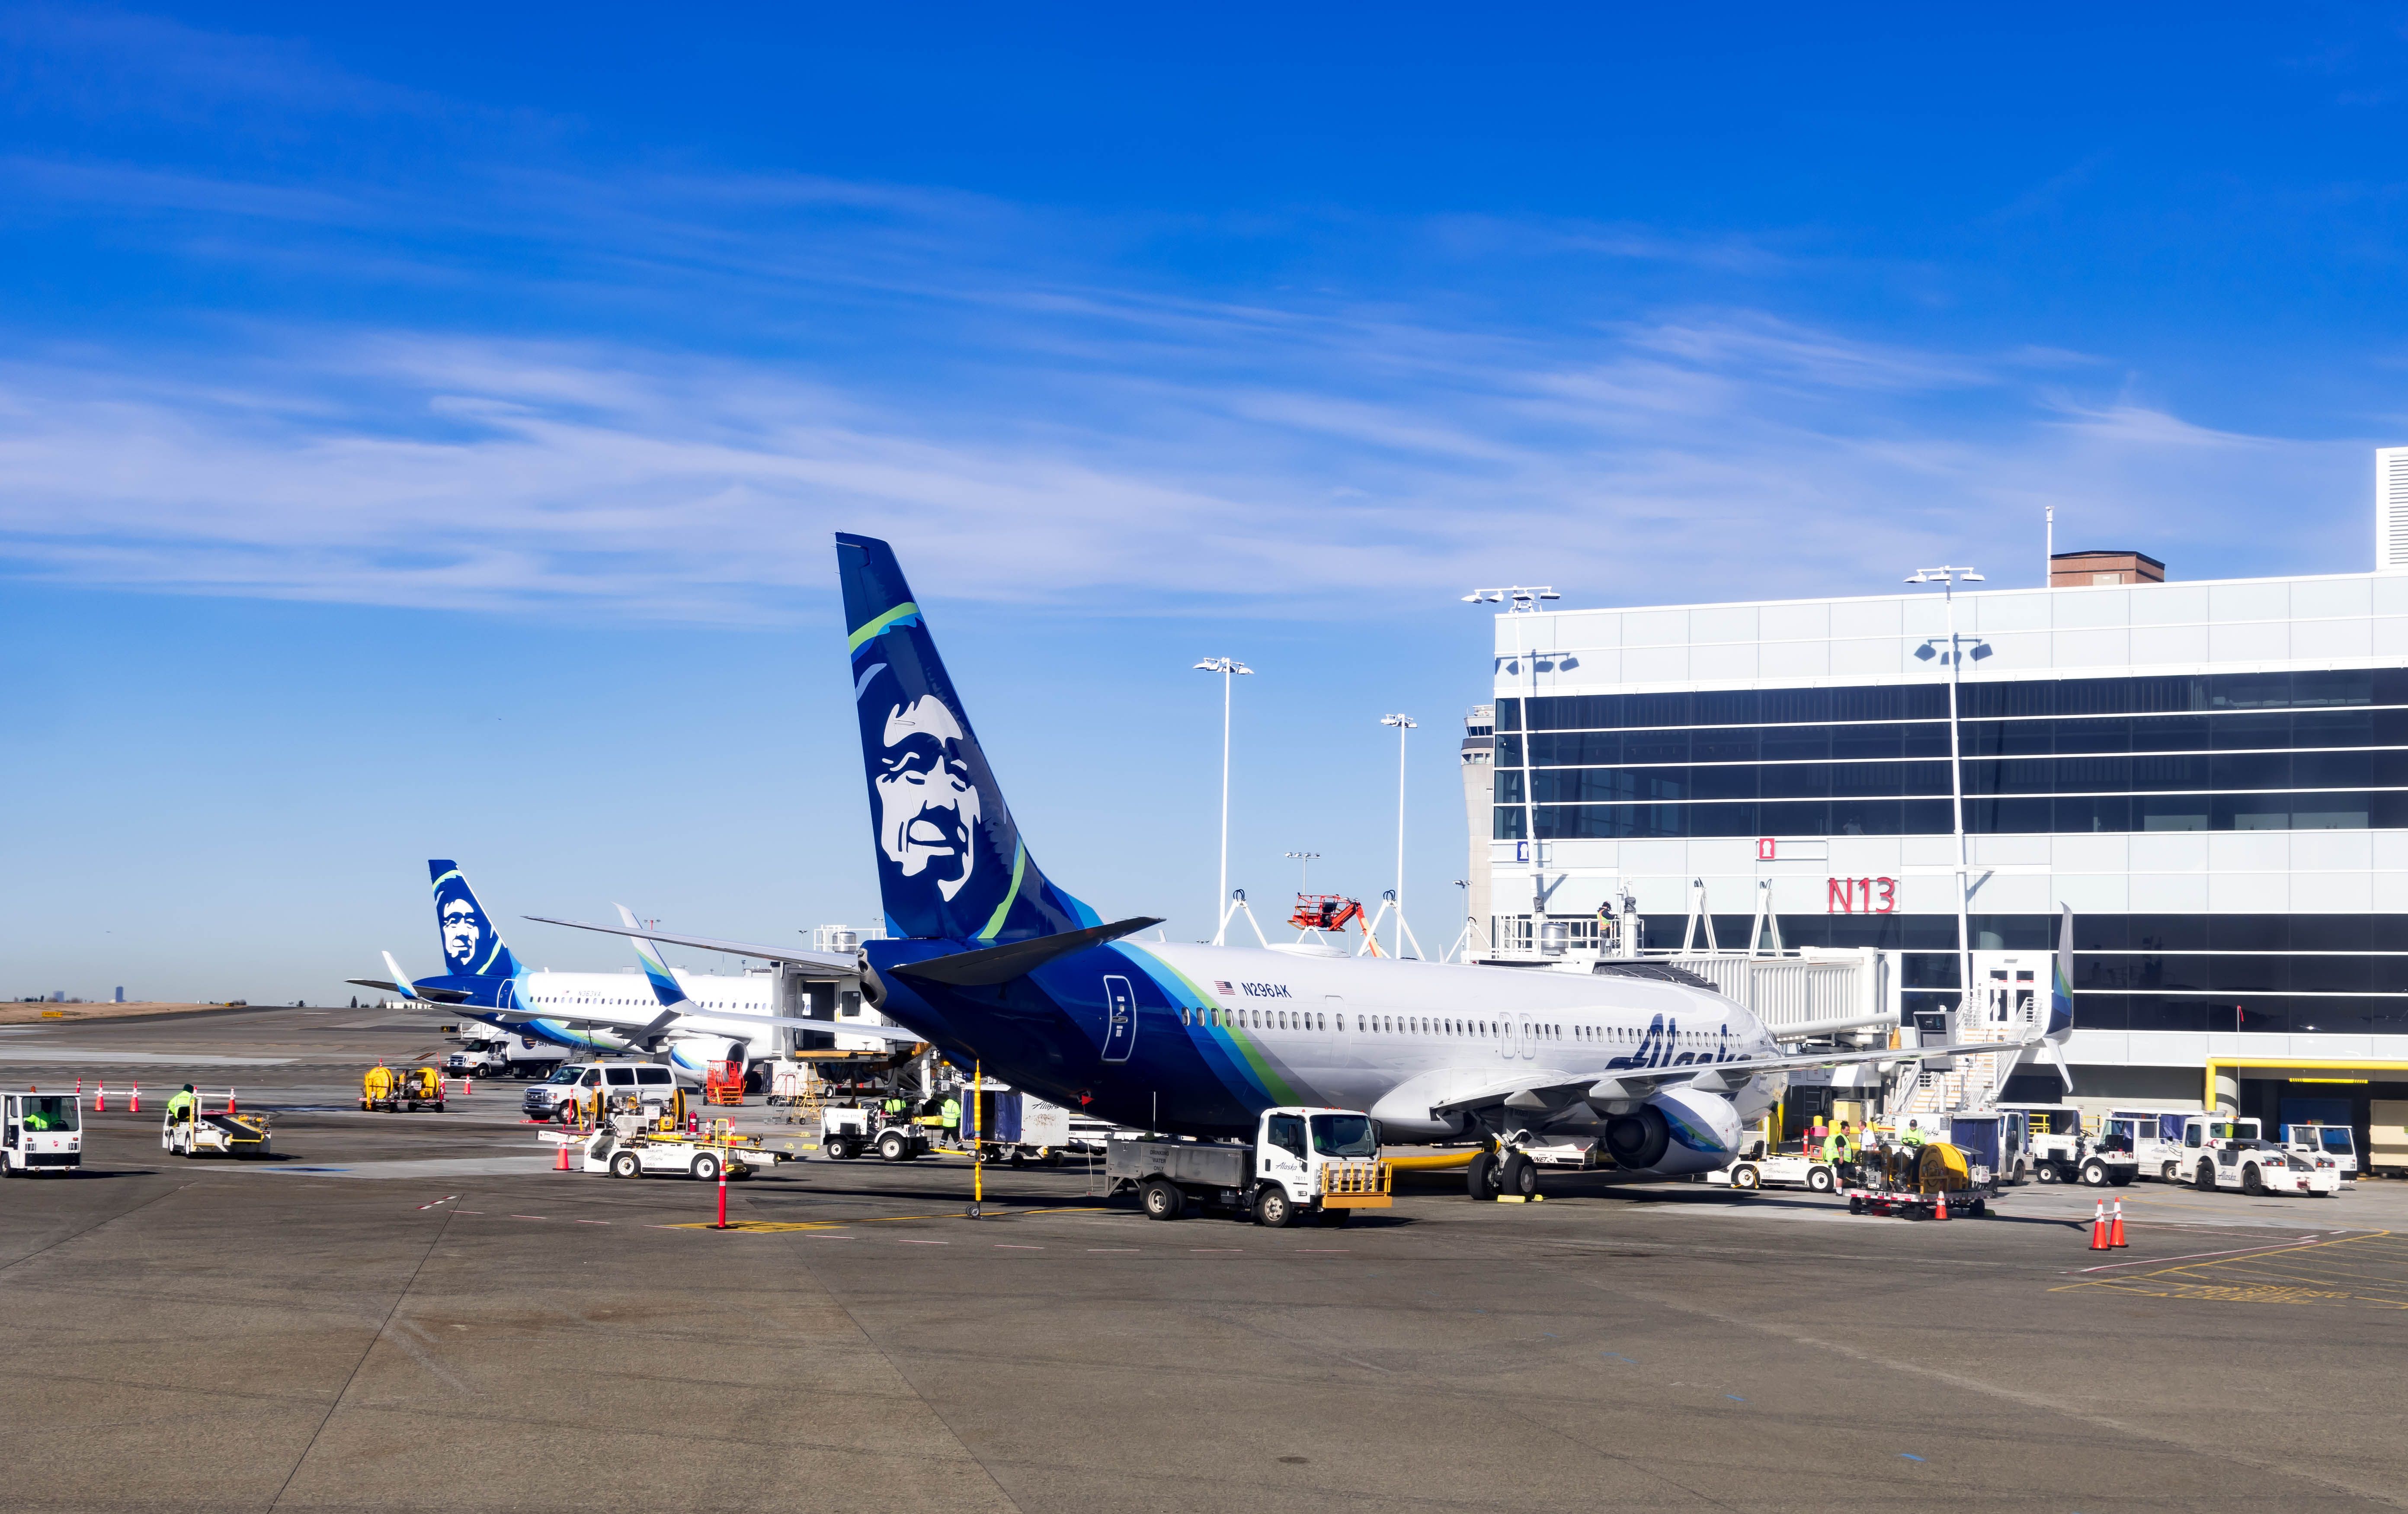 Seatlle Tacoma International Airport (SEA)